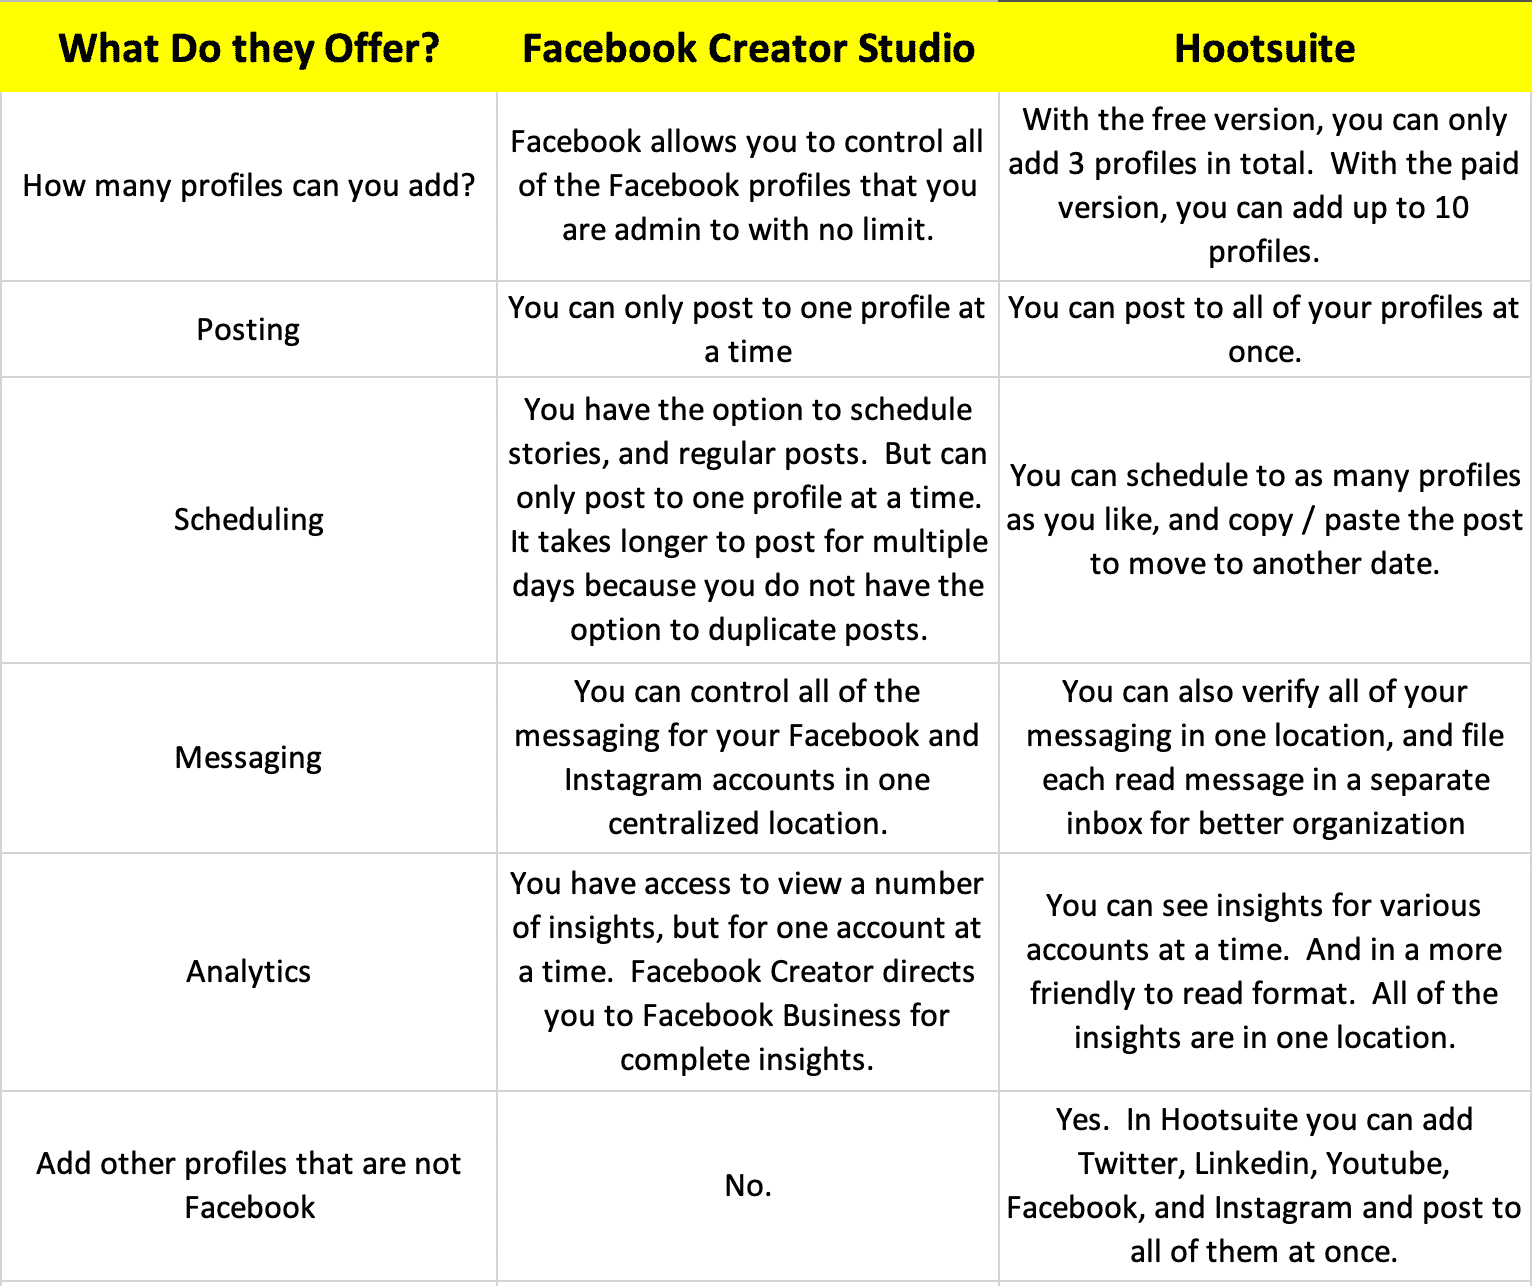 Facebook Creator Studio vs. Hootsuite Final Comparisons